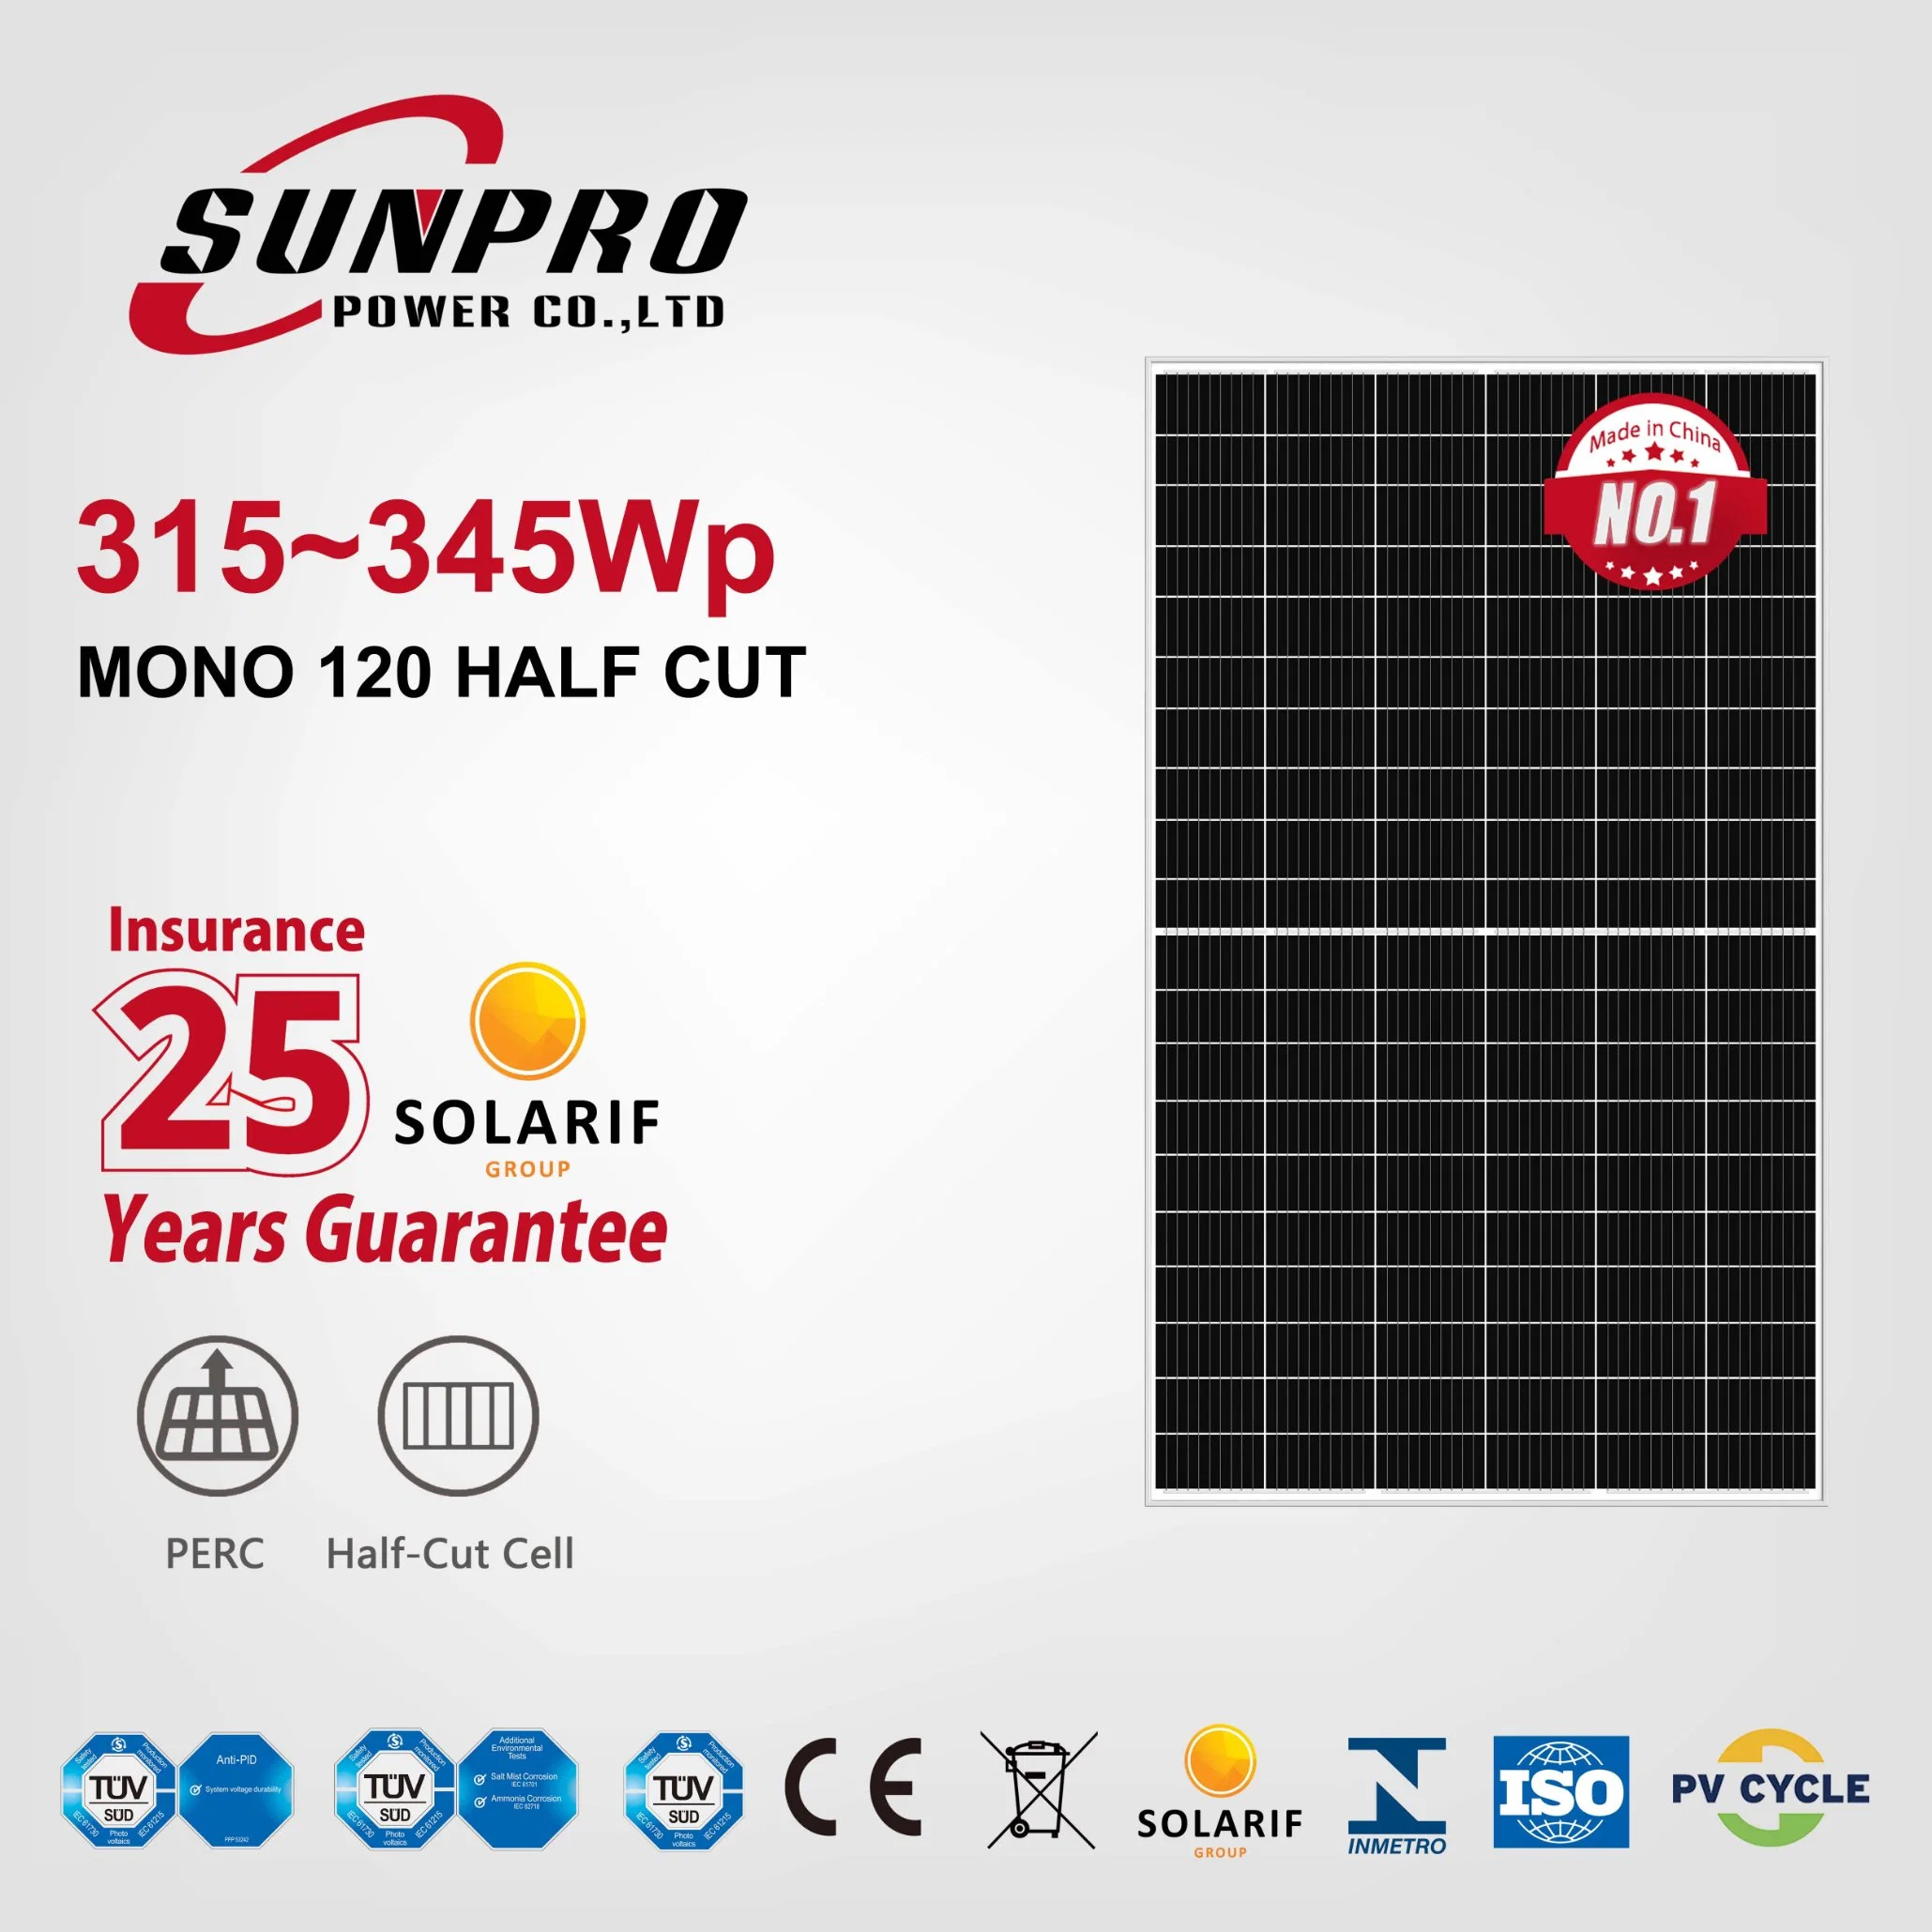 Sunpro Power High Power 330W 335W 340W 345W 350W Solar Panel Mono 158mm G1 120 Half Cut Solar Cell Monocrytalline PV Energy Power